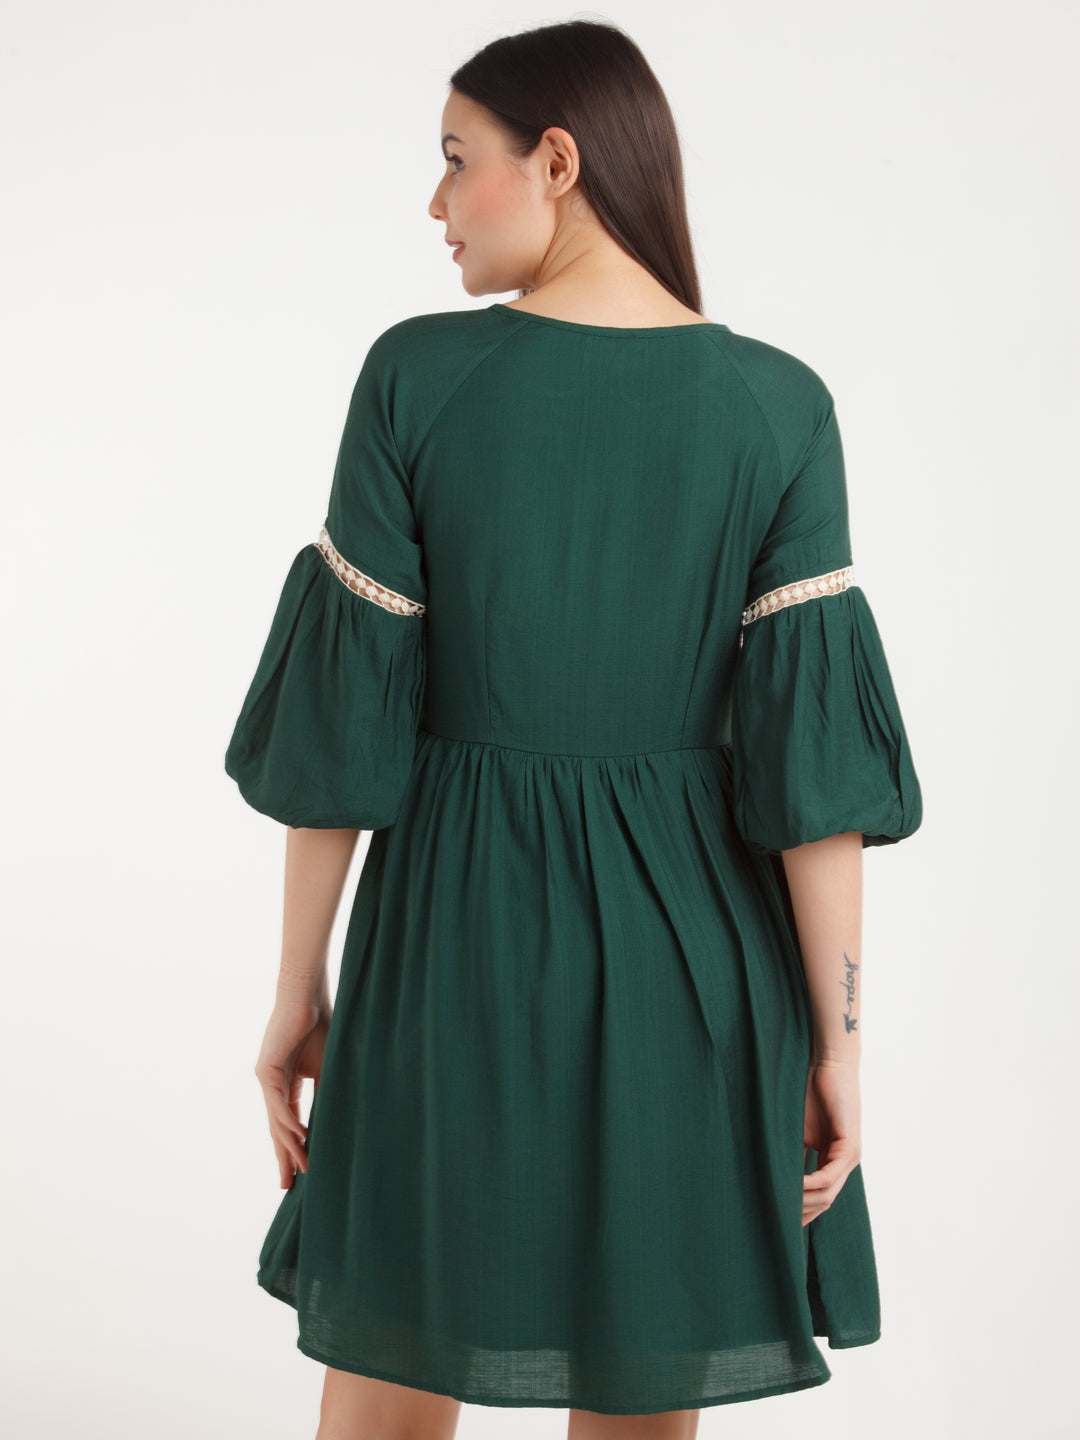 Green Solid Mini Dress For Women